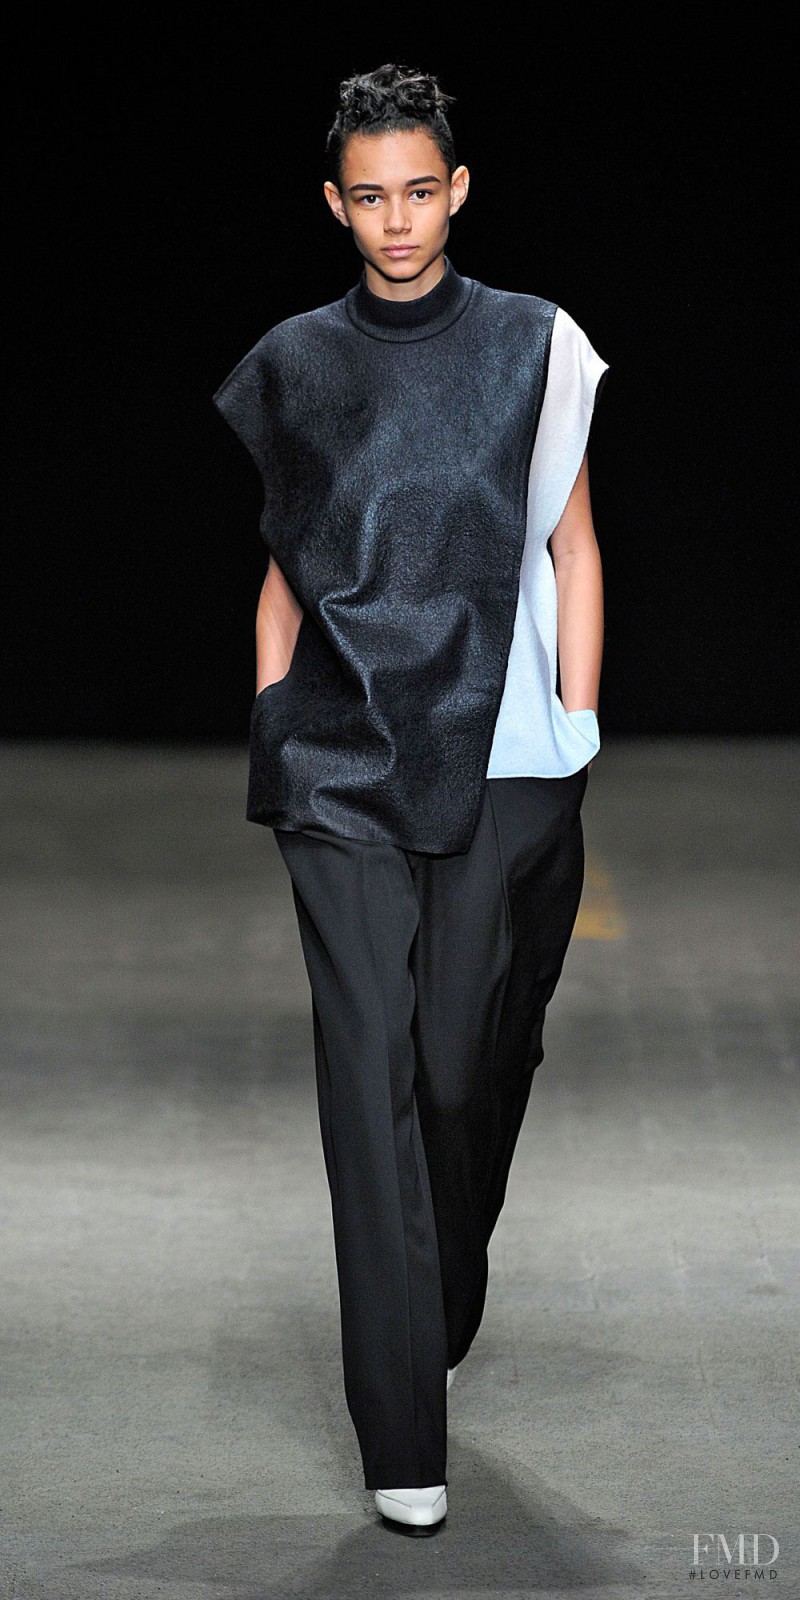 Binx Walton featured in  the 3.1 Phillip Lim fashion show for Autumn/Winter 2014